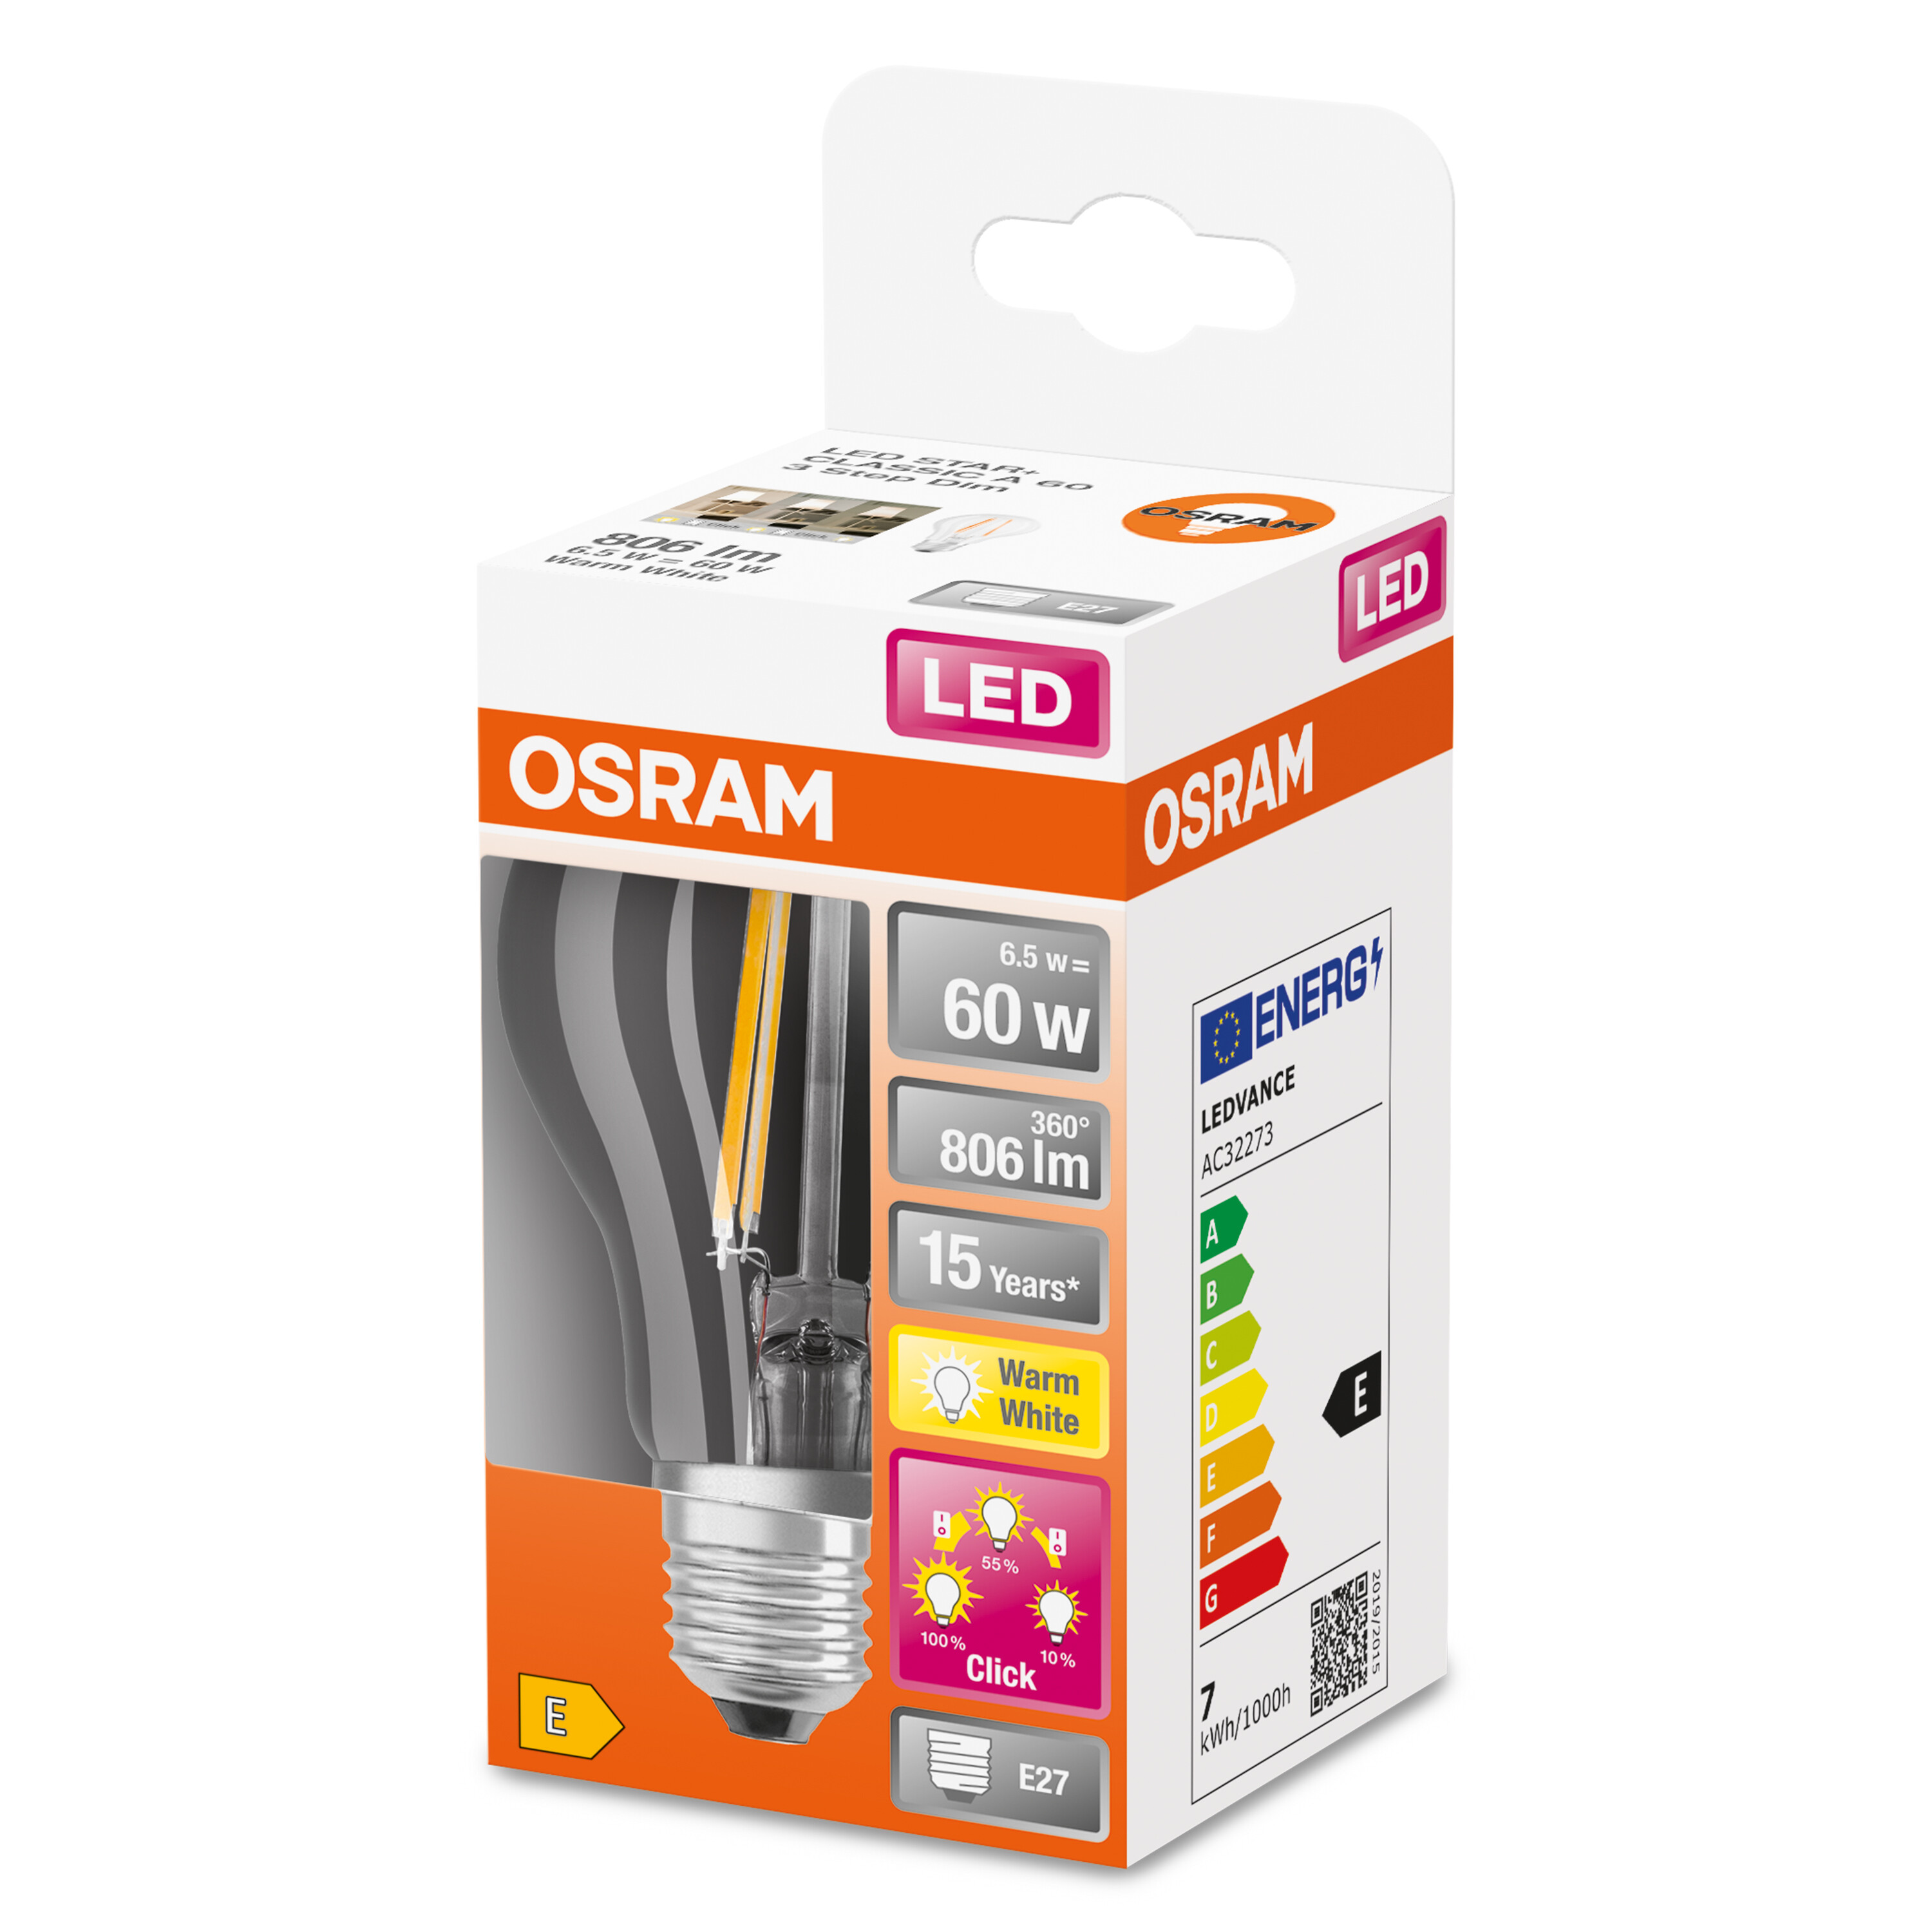 OSRAM  LED THREE STEP DIM Warmweiß CLASSIC Lampe LED Lumen A 806